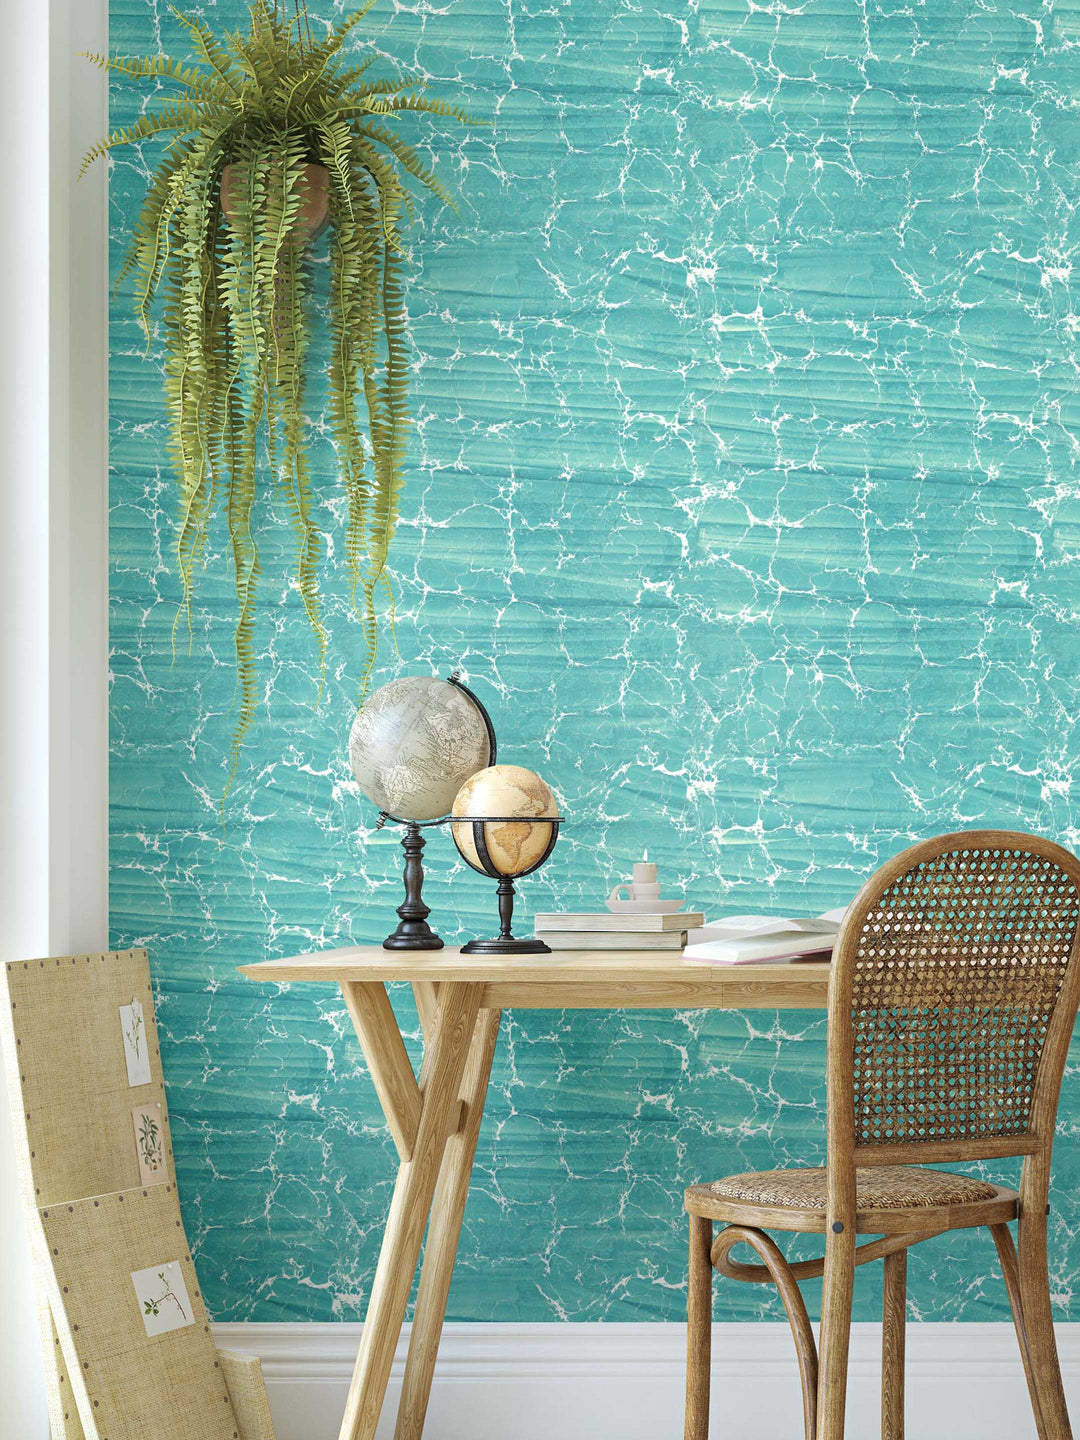 A statement aqua blue marbled wallpaper mimicing rippling water on an interior wall